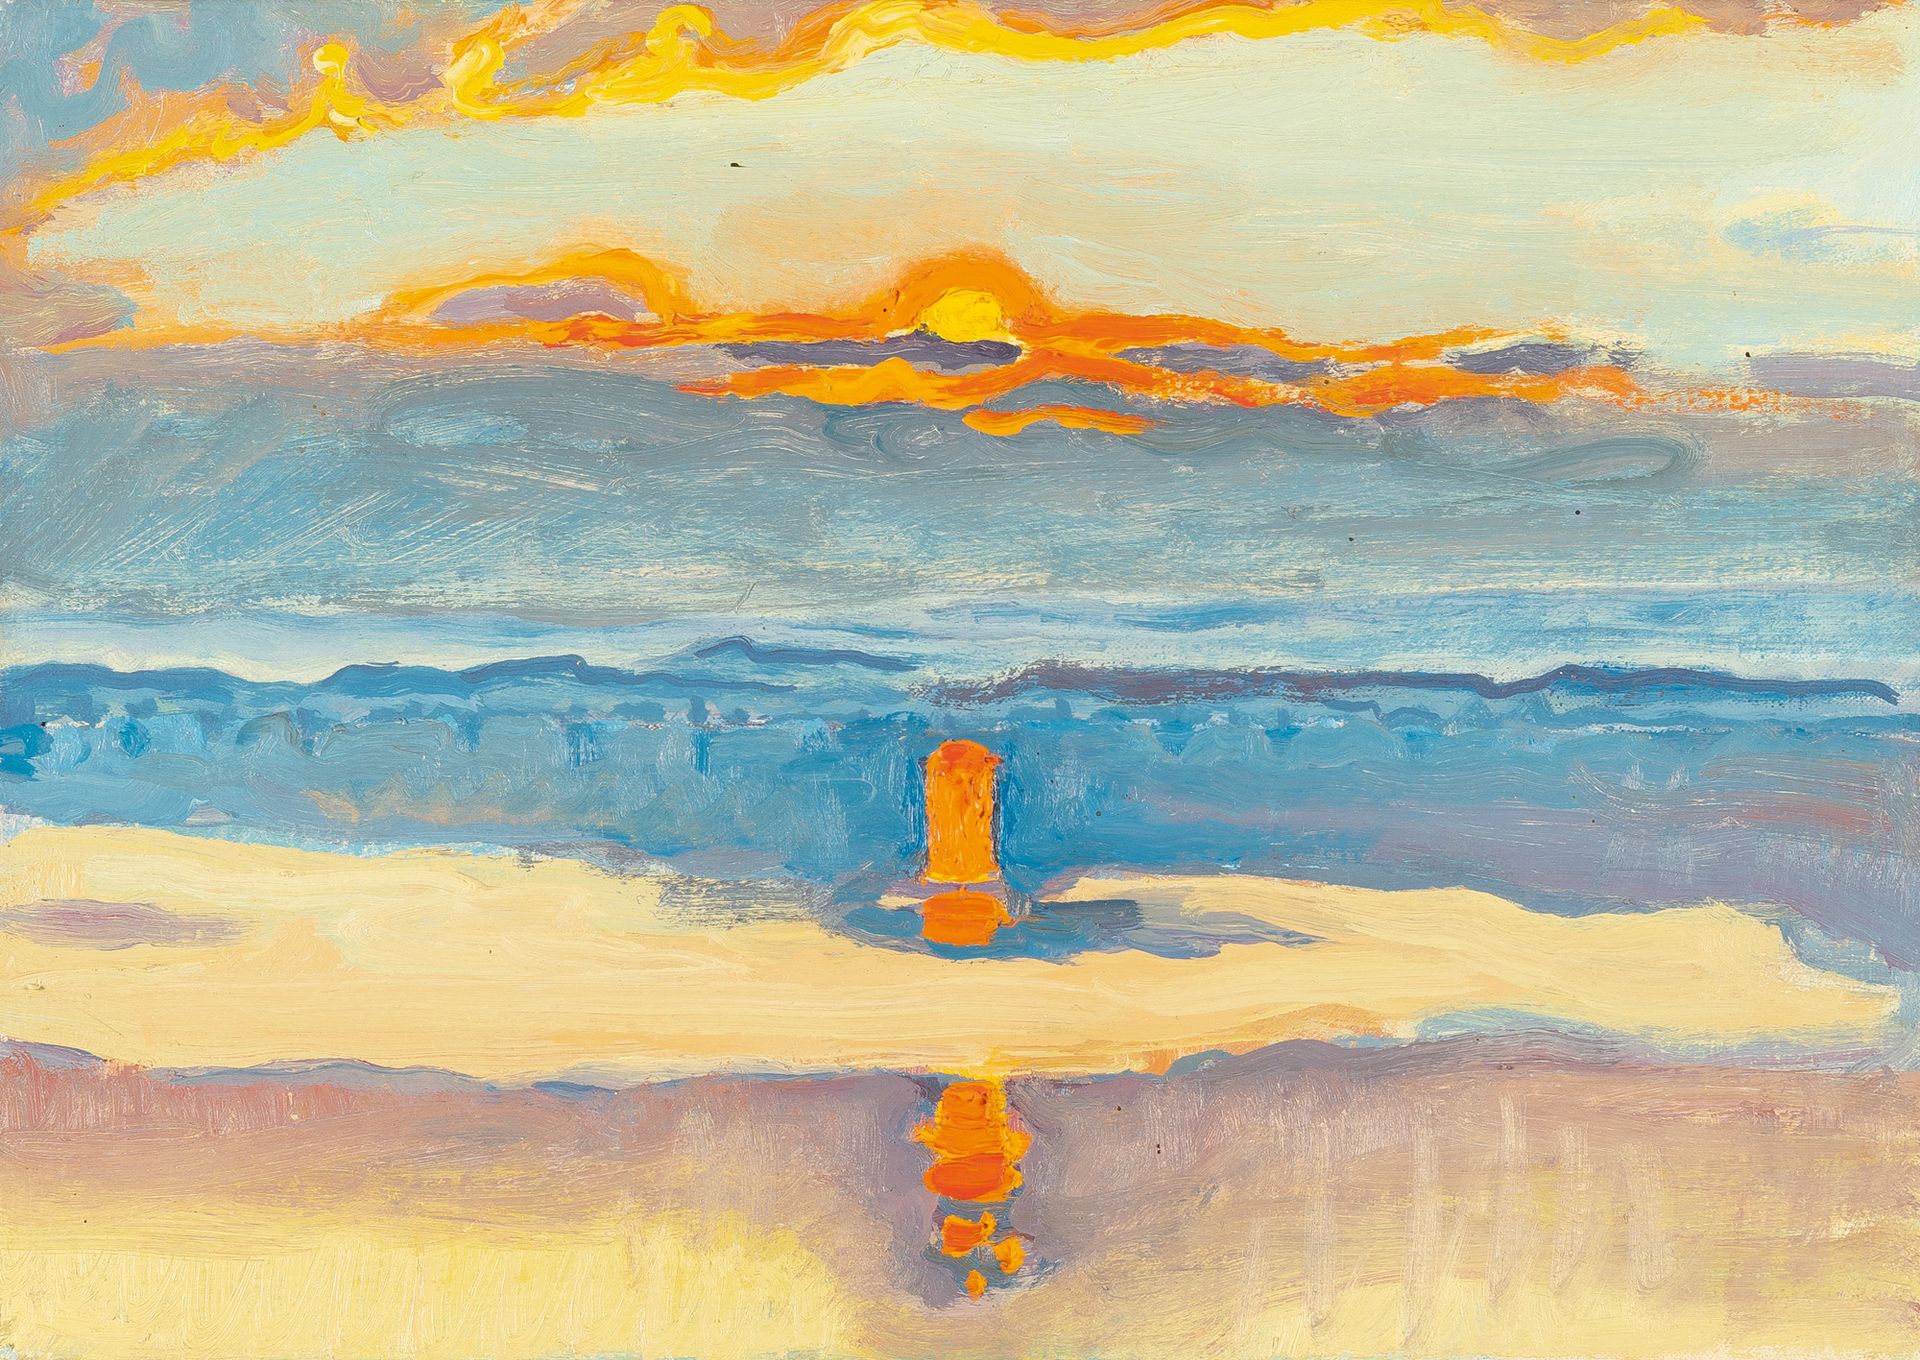 Jean-Frédéric Schnyder 让-弗雷德里克-施奈德，《楚格湖畔的日落》（17）。

布面油画。(19)96.约21 x 30厘米。在画布的一侧&hellip;